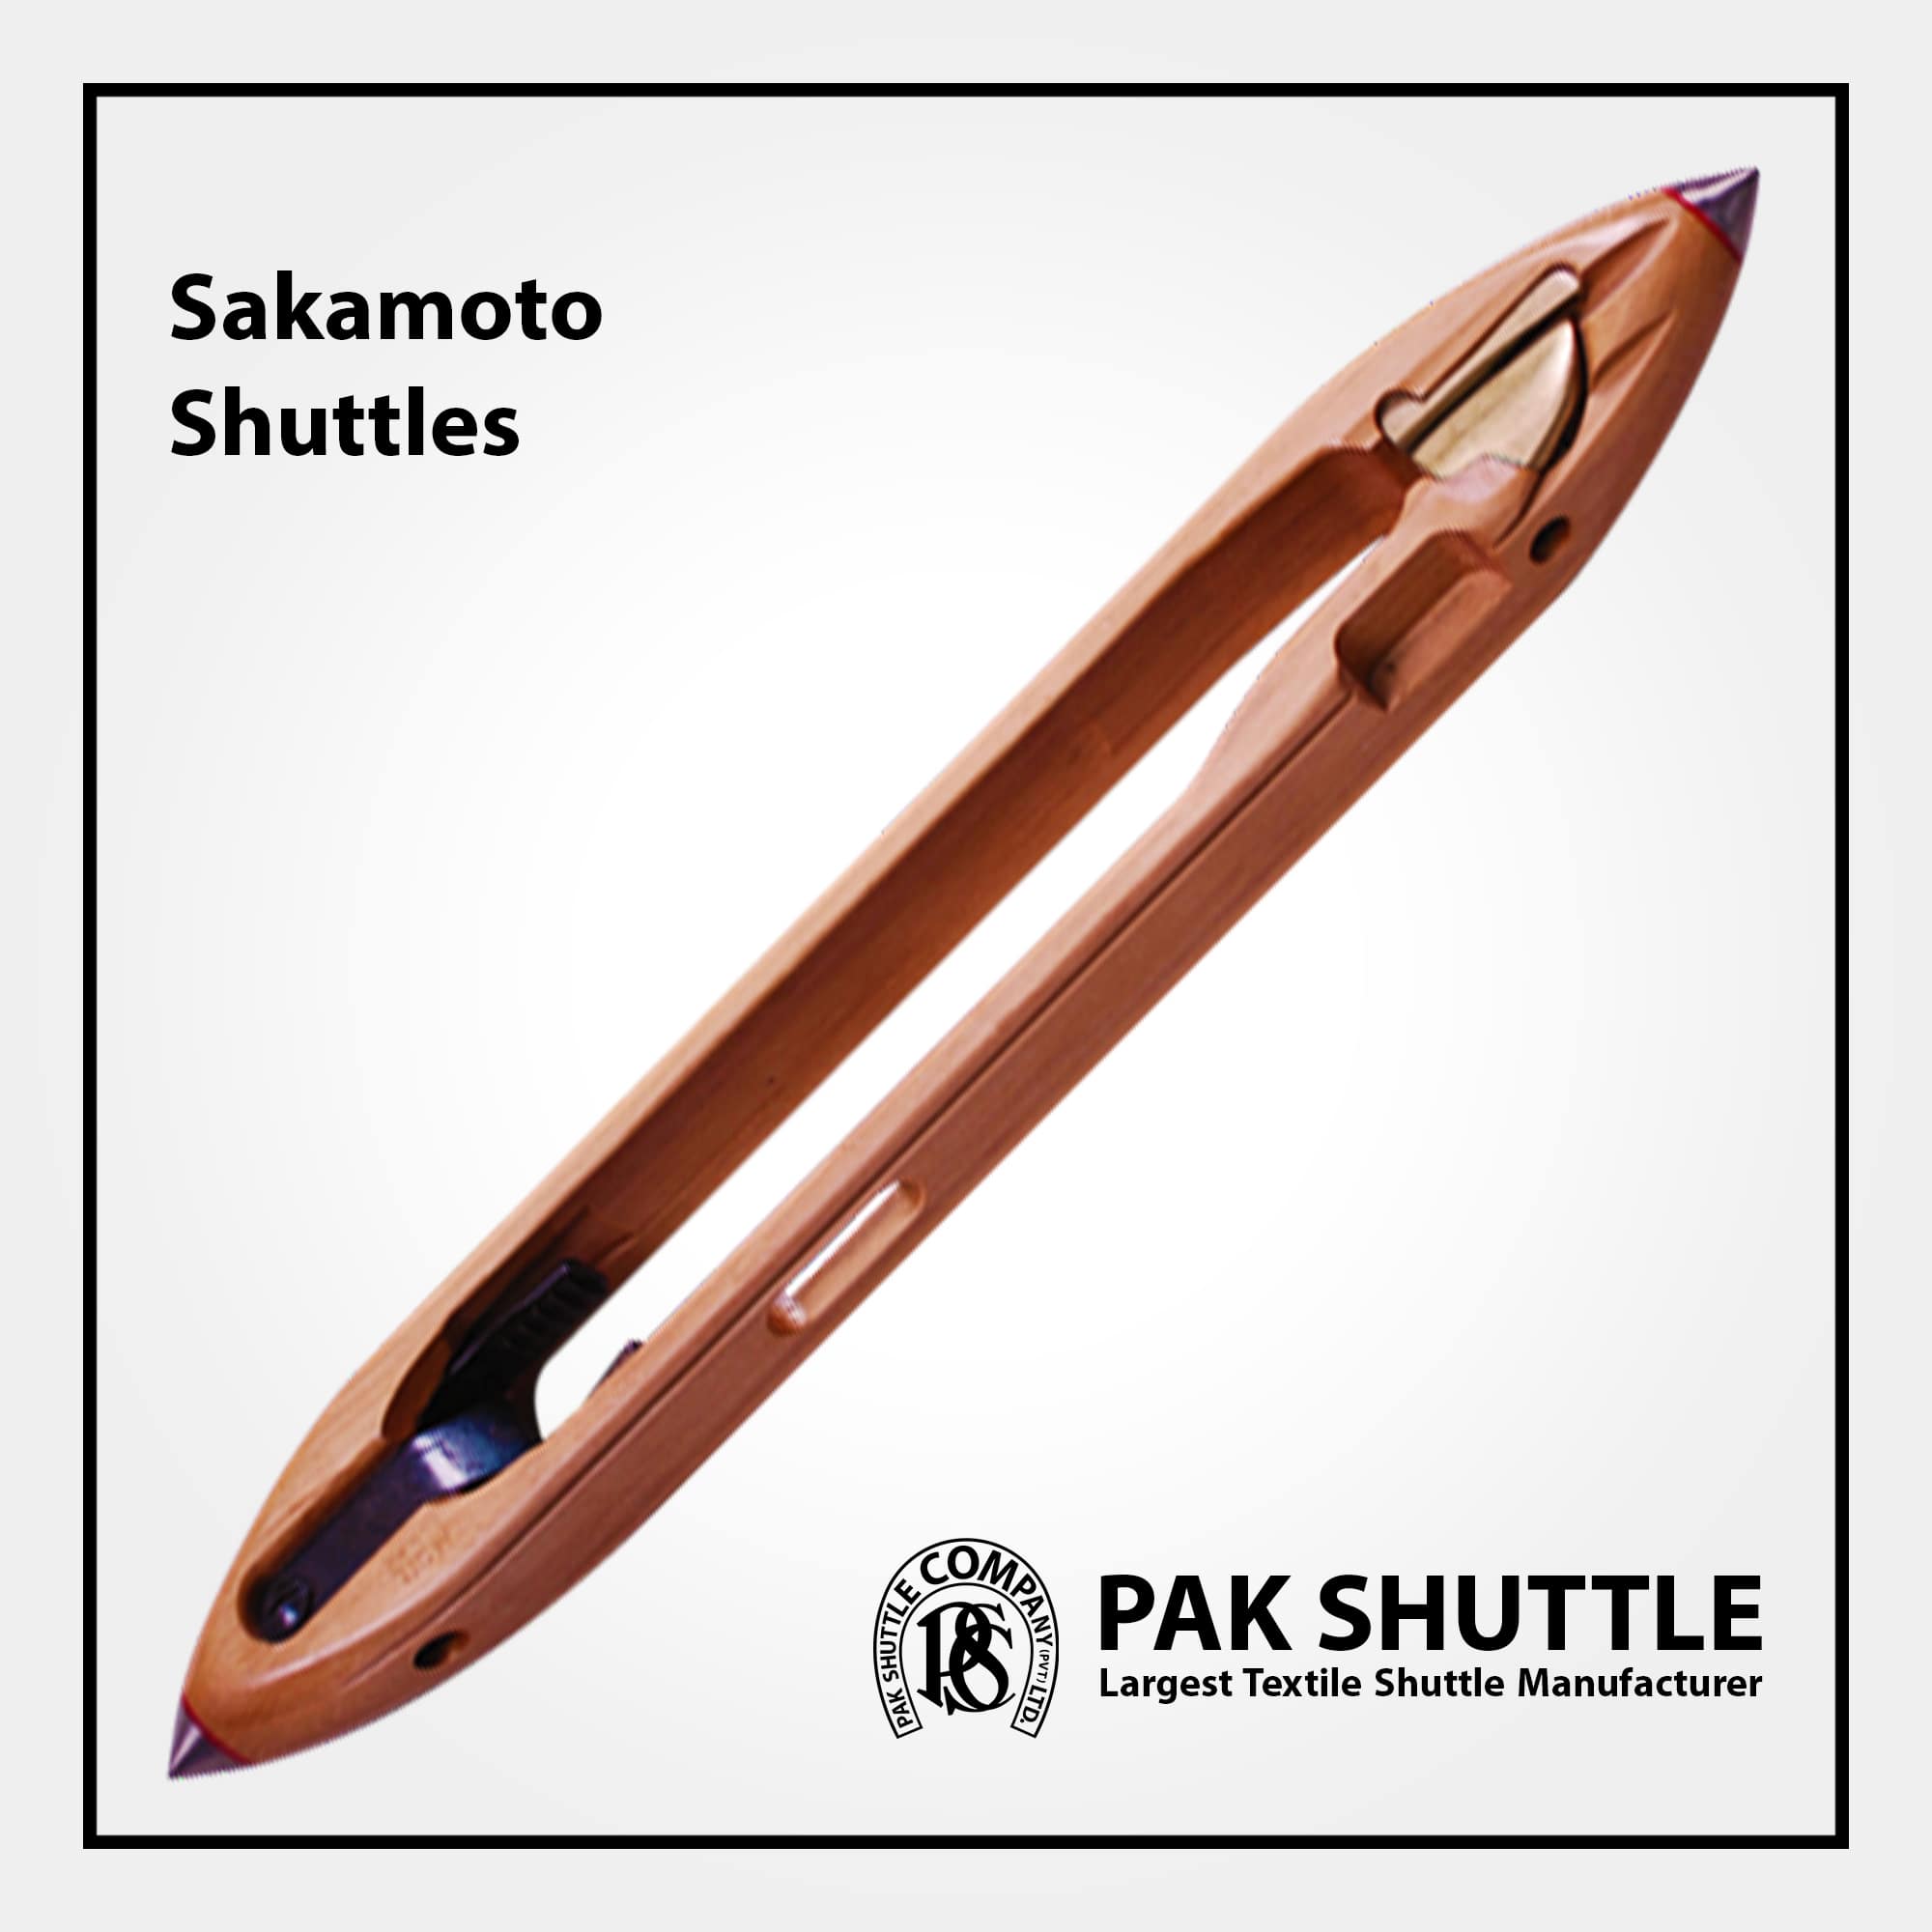 Sakamoto Shuttle by Pak Shuttle Company Pvt Ltd.